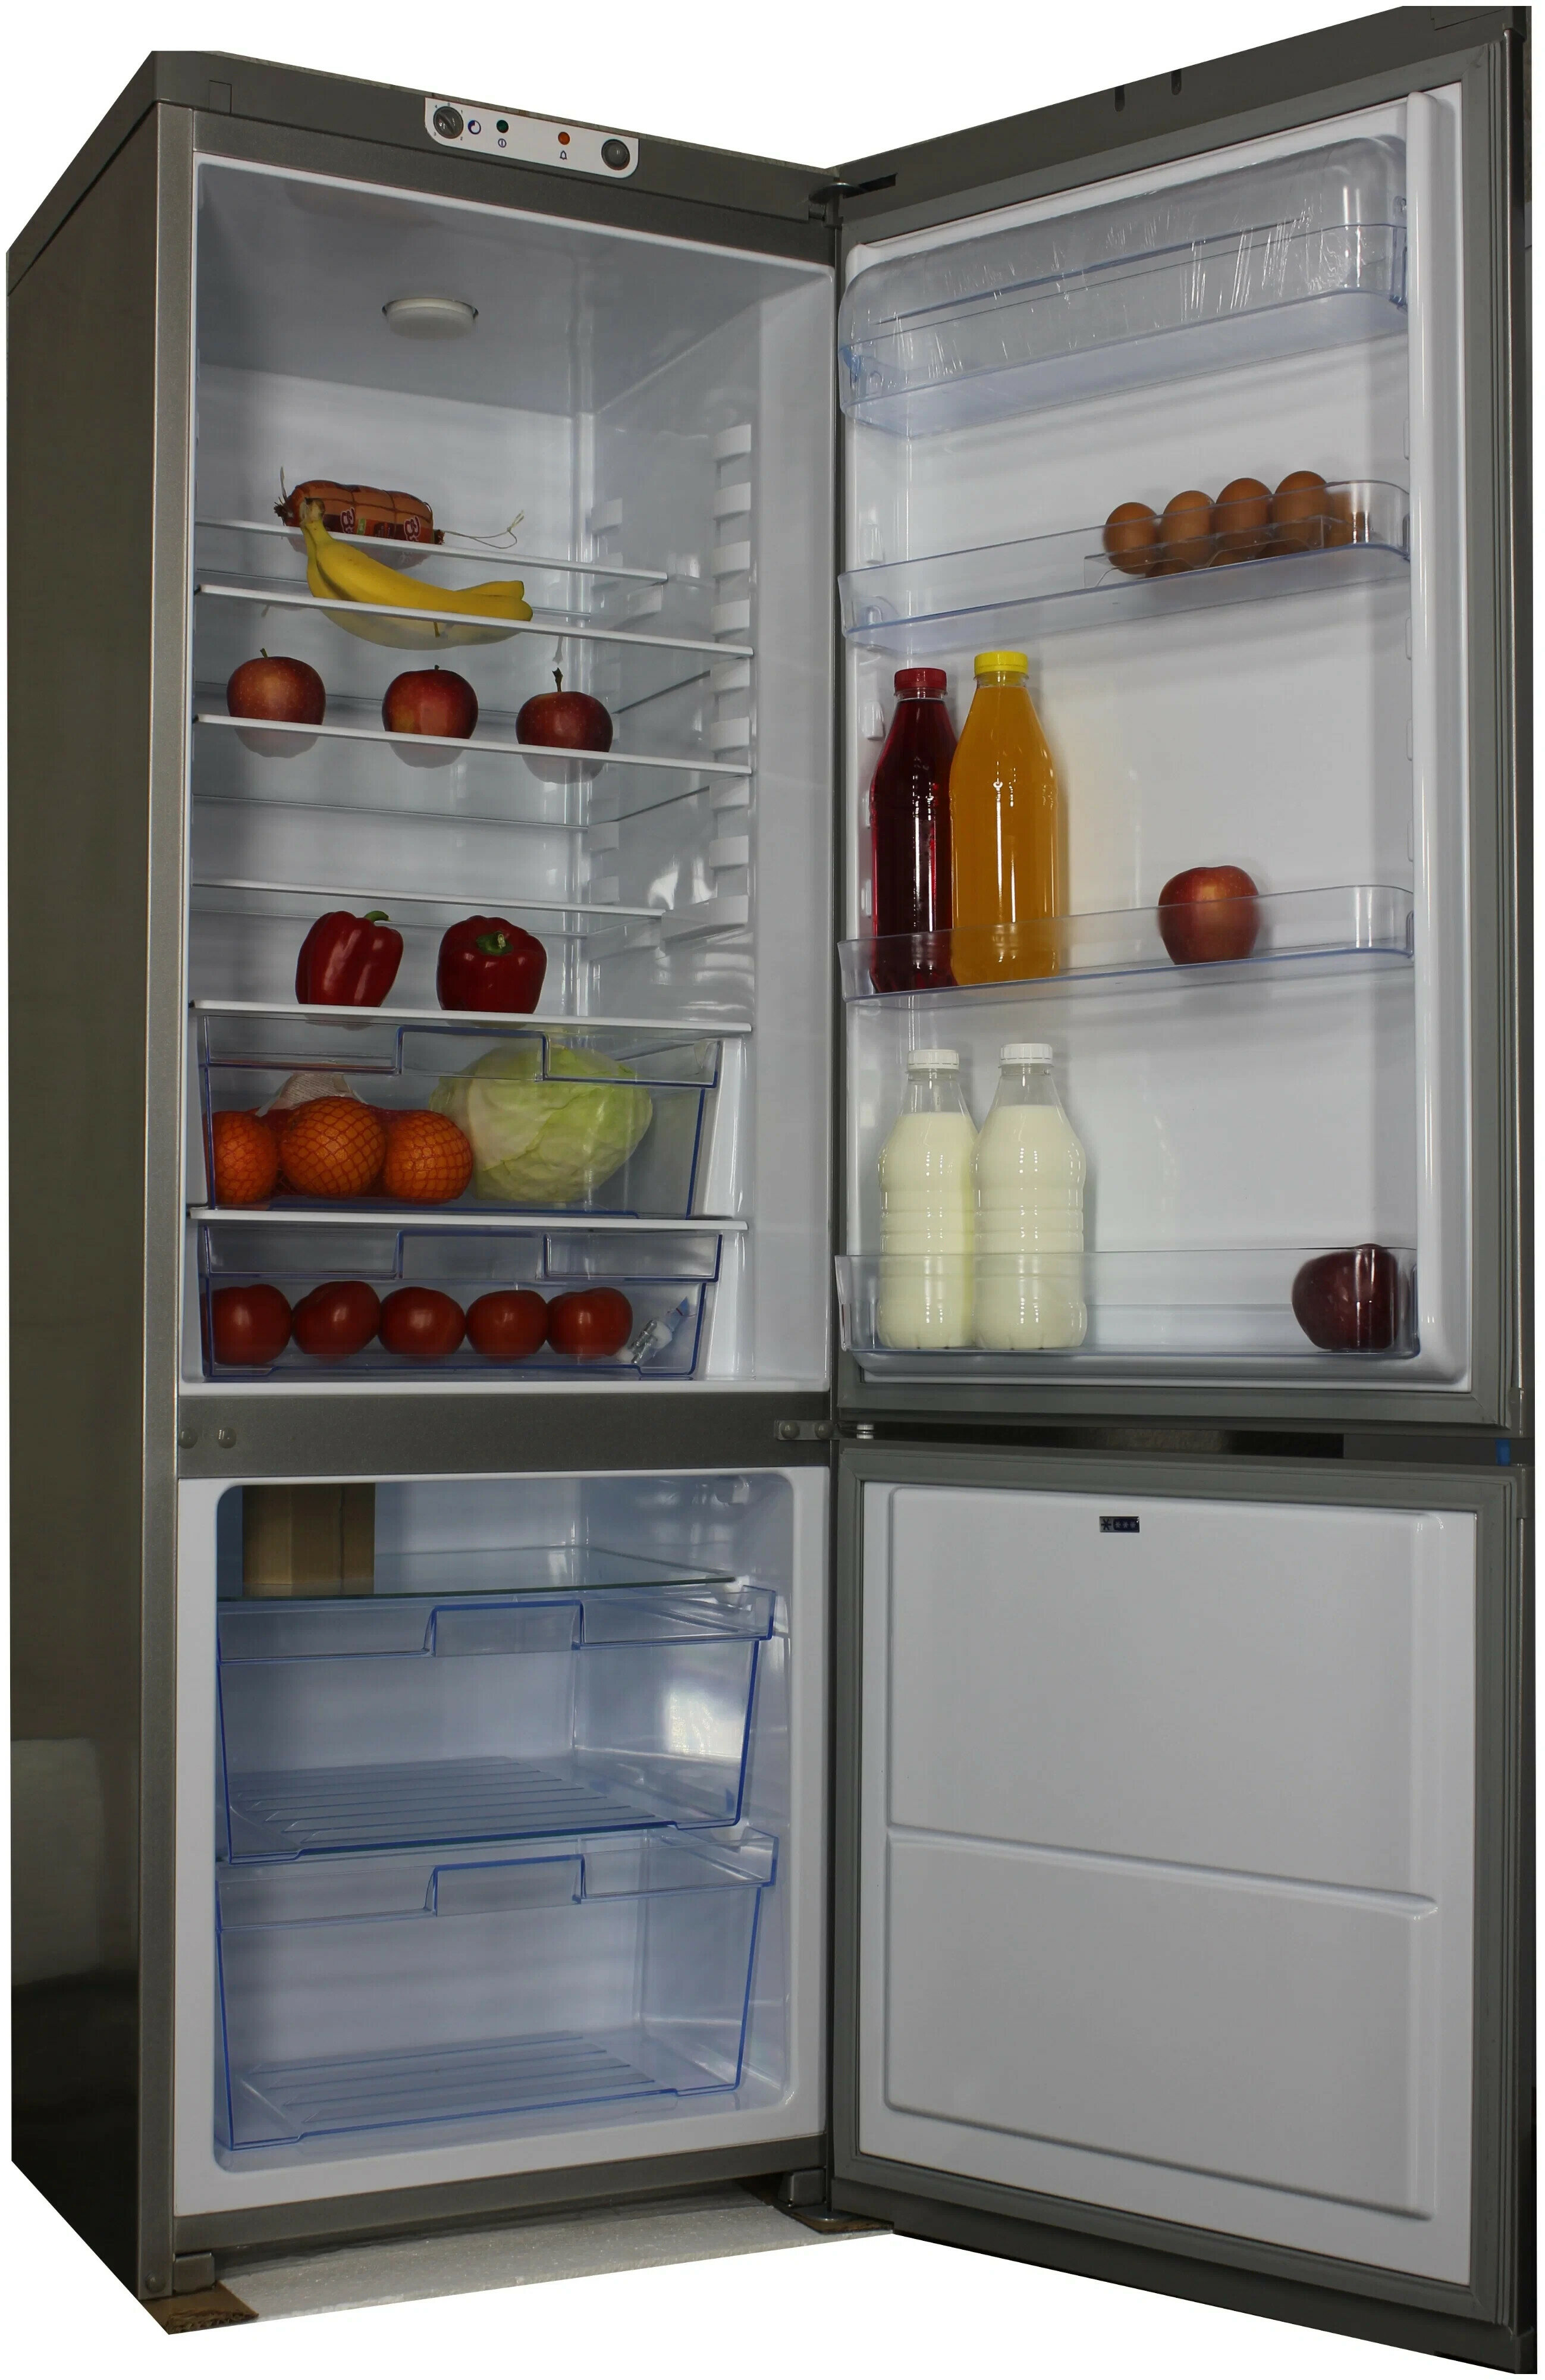 Холодильник орск 173MI металлик